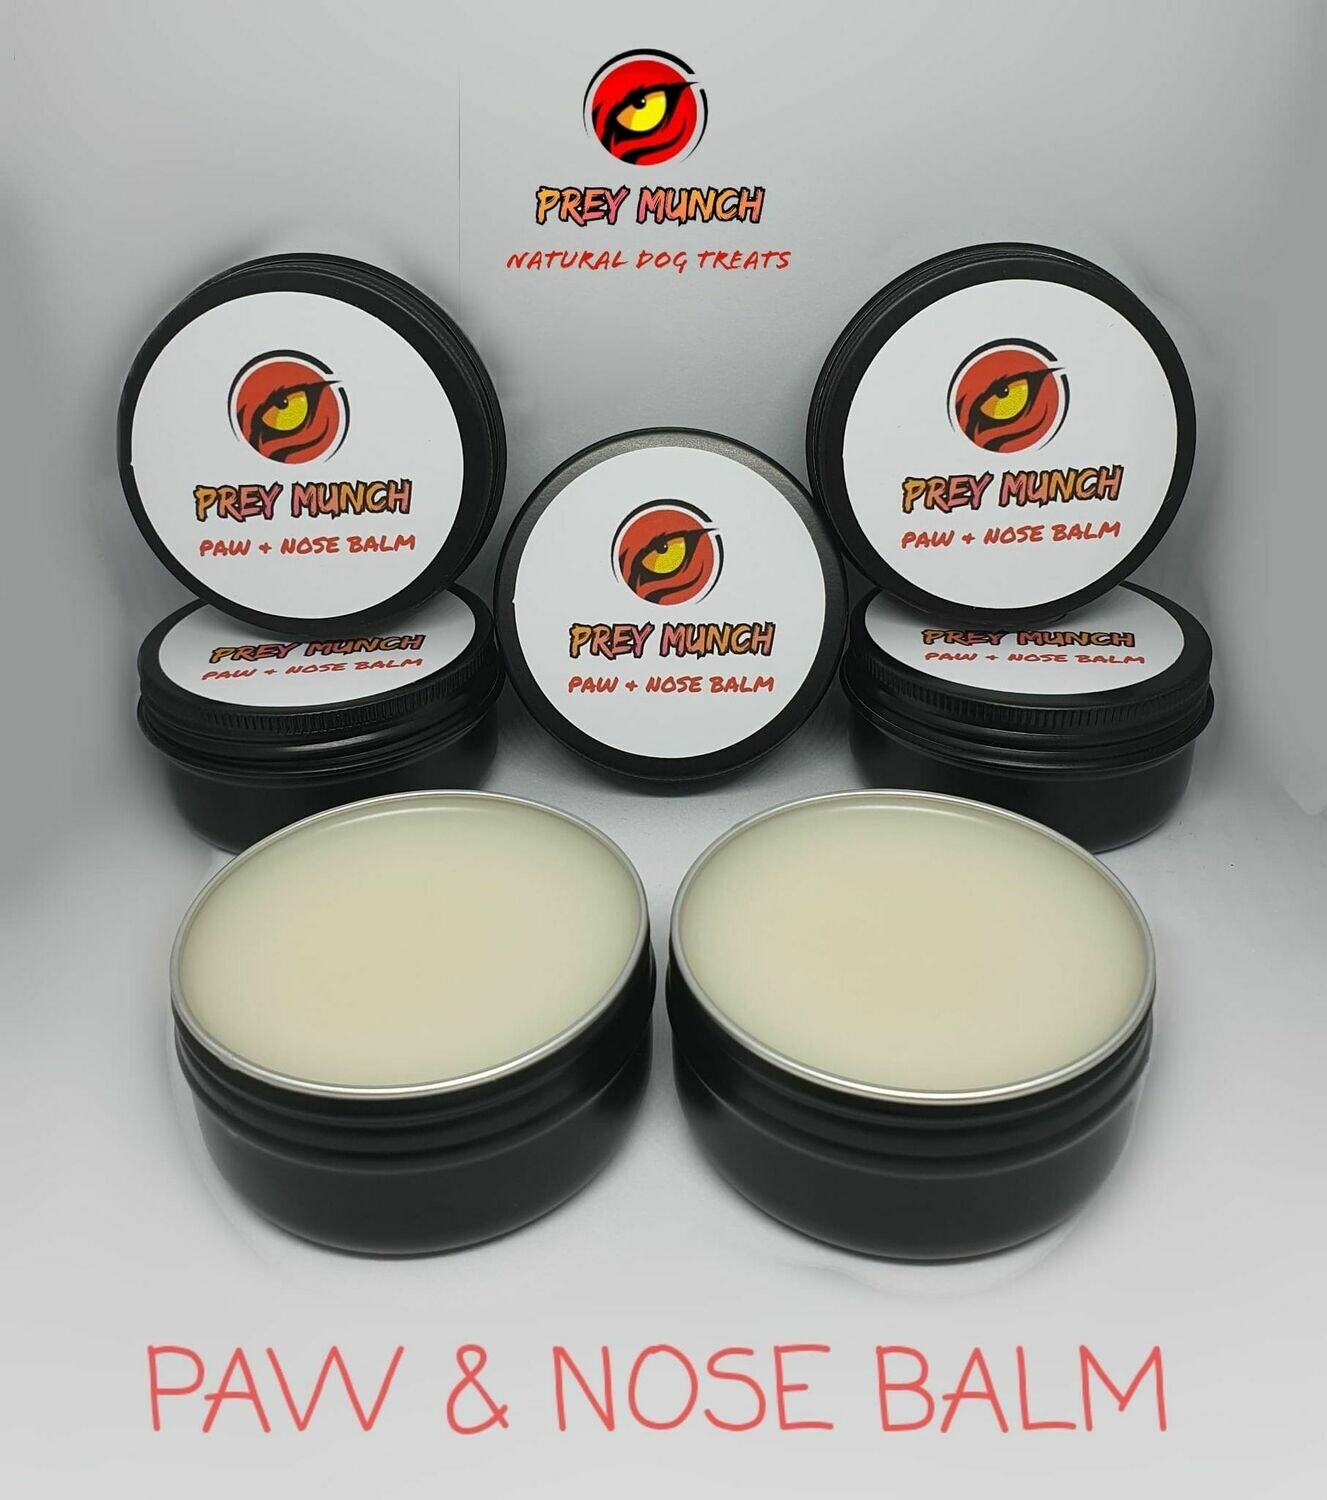 Prey Munch Paw & Nose Balm